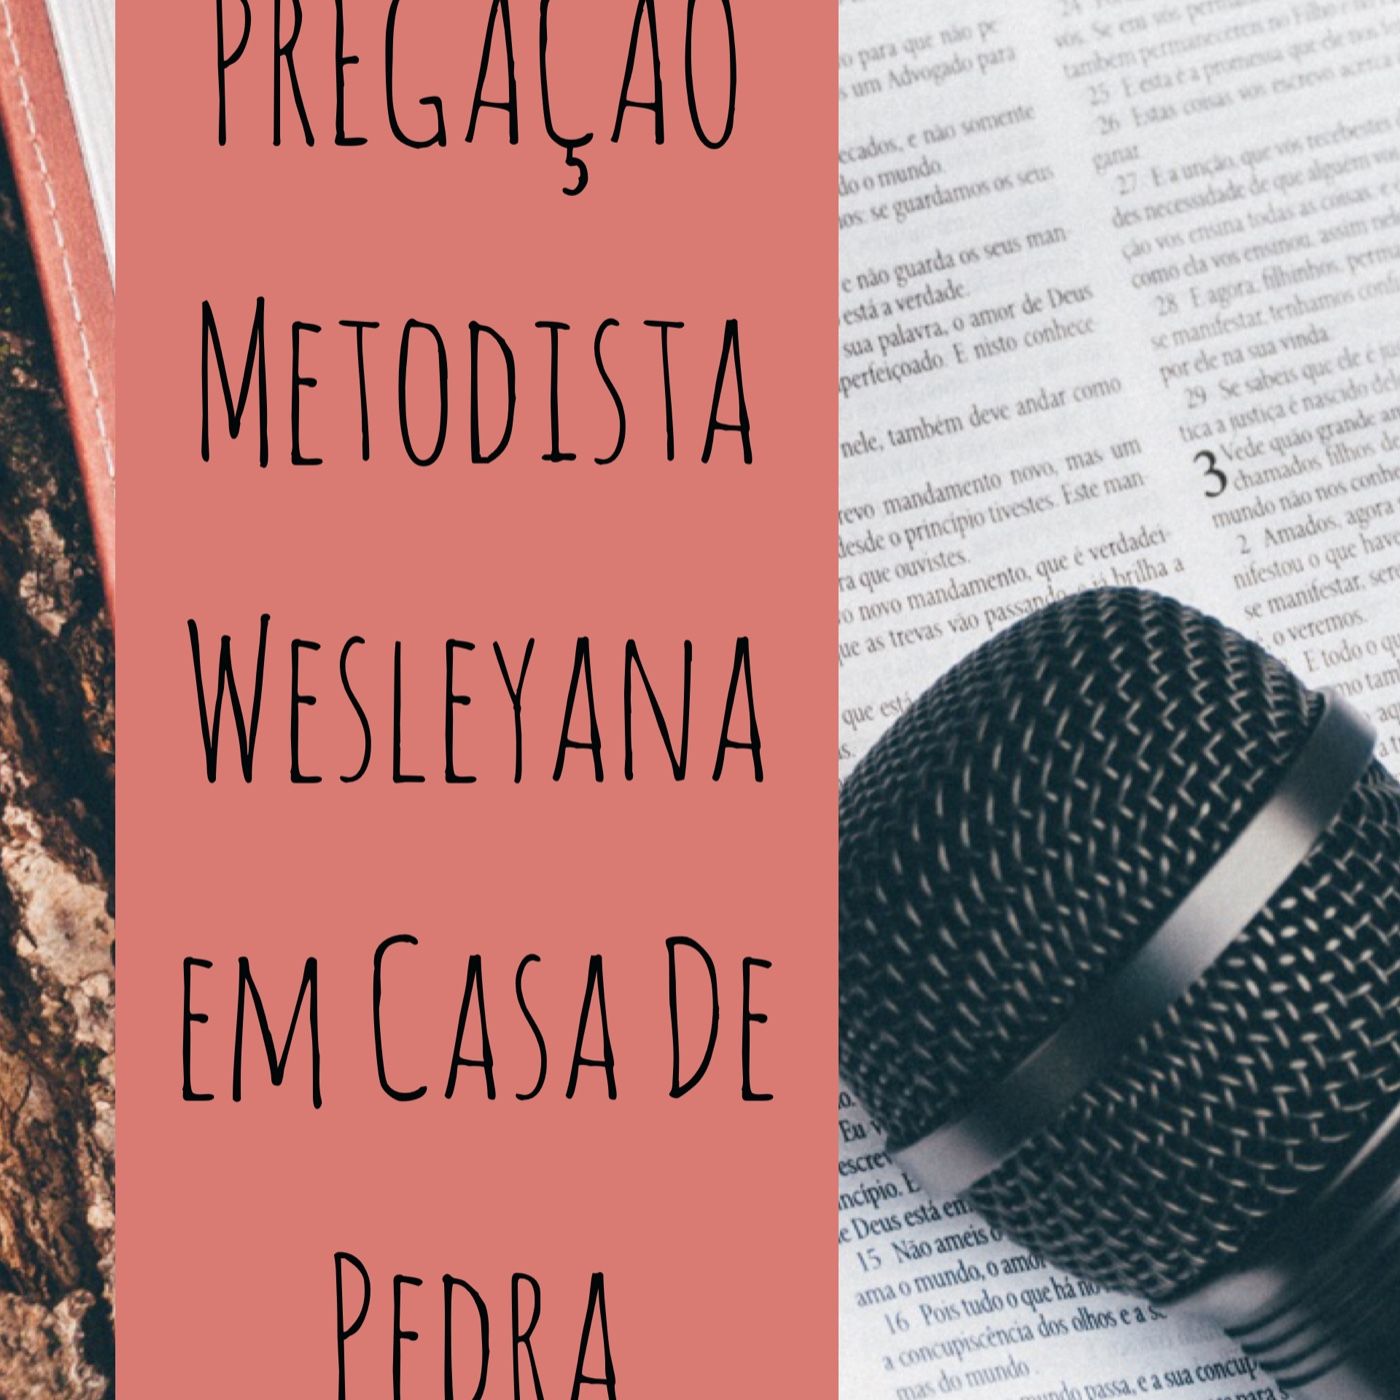 IGREJA METODISTA WESLEYANA CASA DE PEDRA